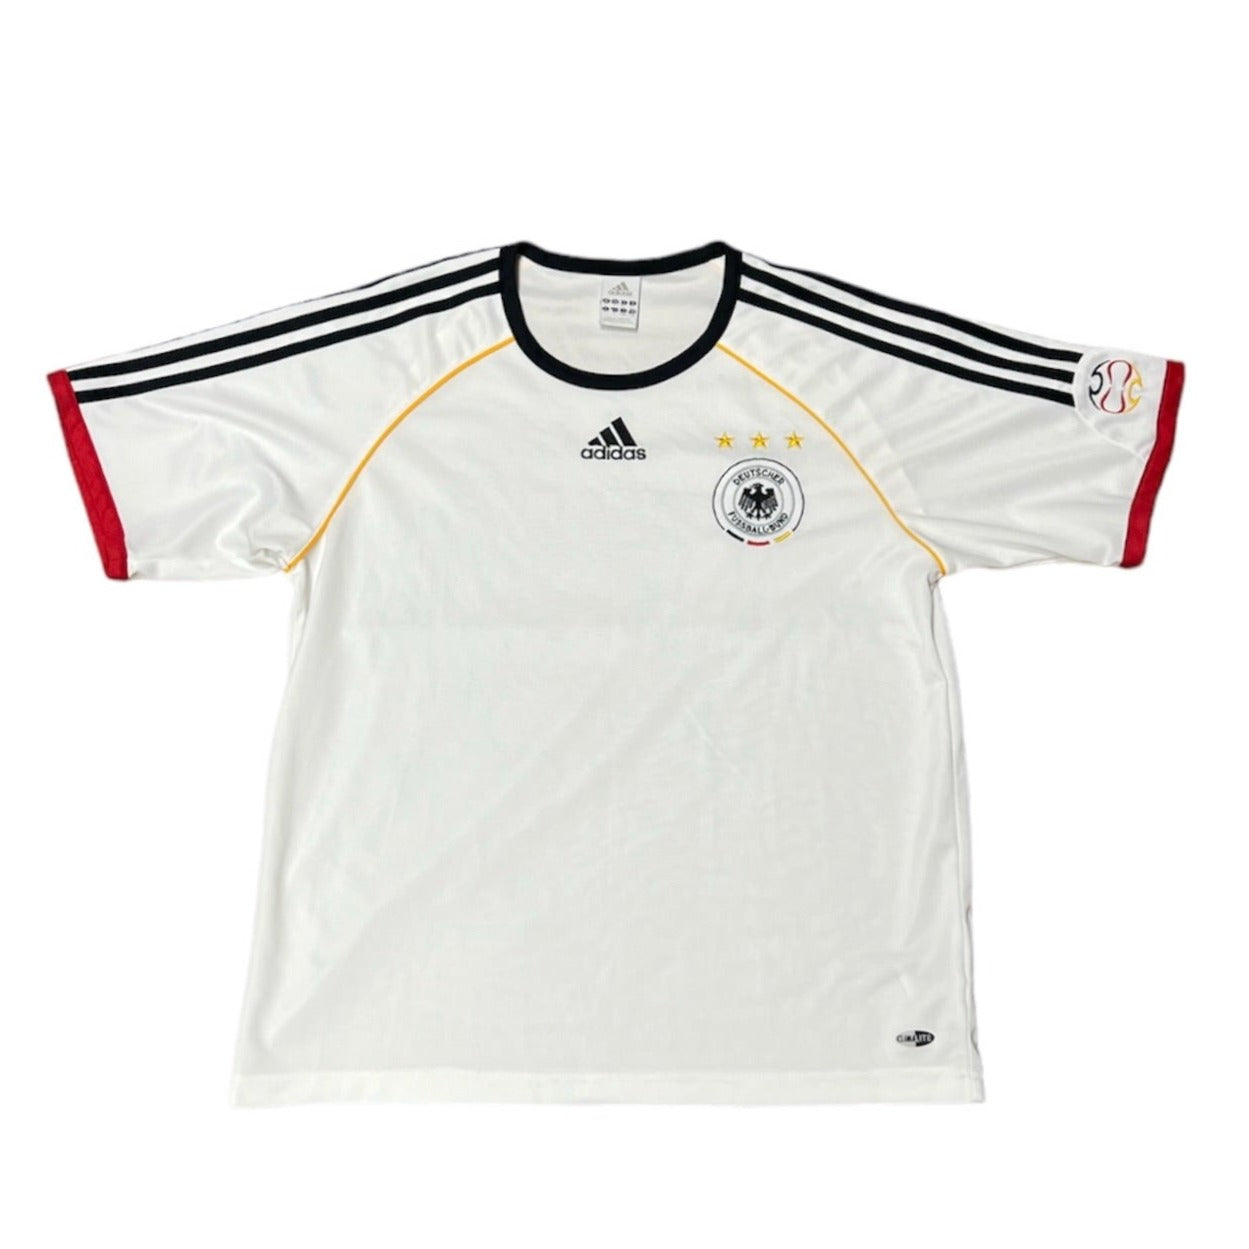 Adidas Germany Shirt 2005-2007 Football Jersey